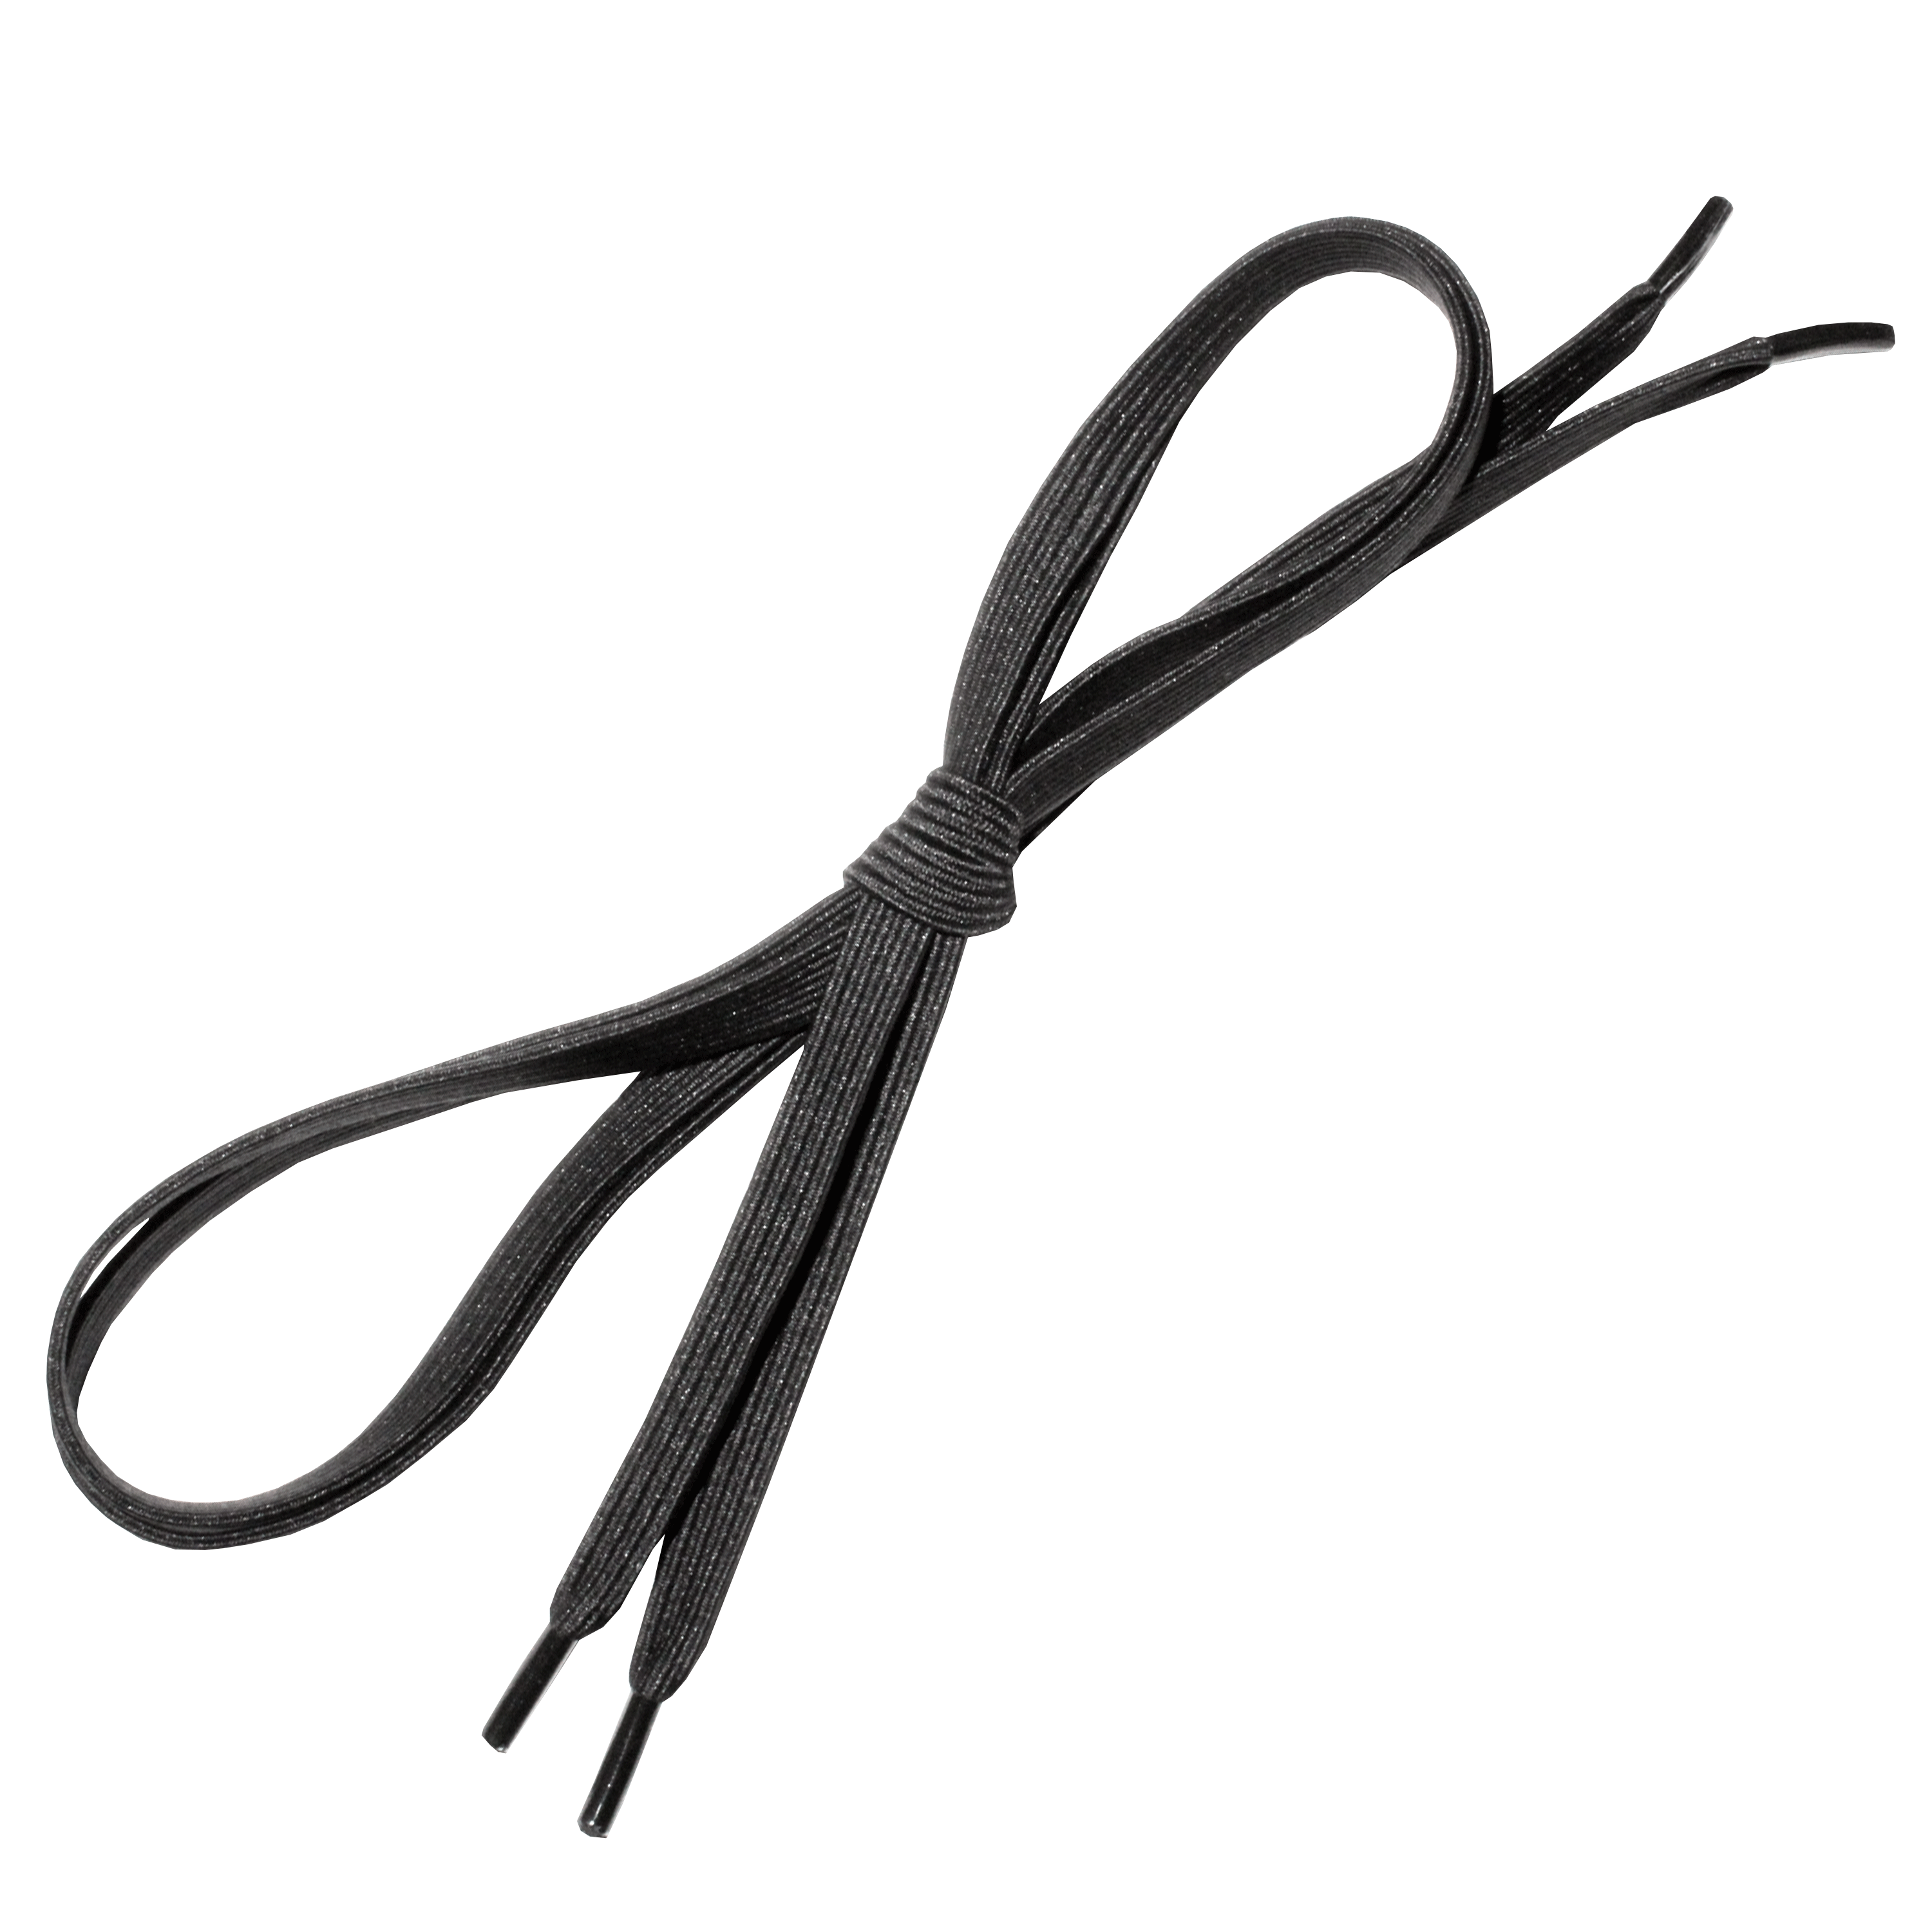 Laces Lock Bracks Shoelace clips, a pair Black / Black Keep Your Laces Tied